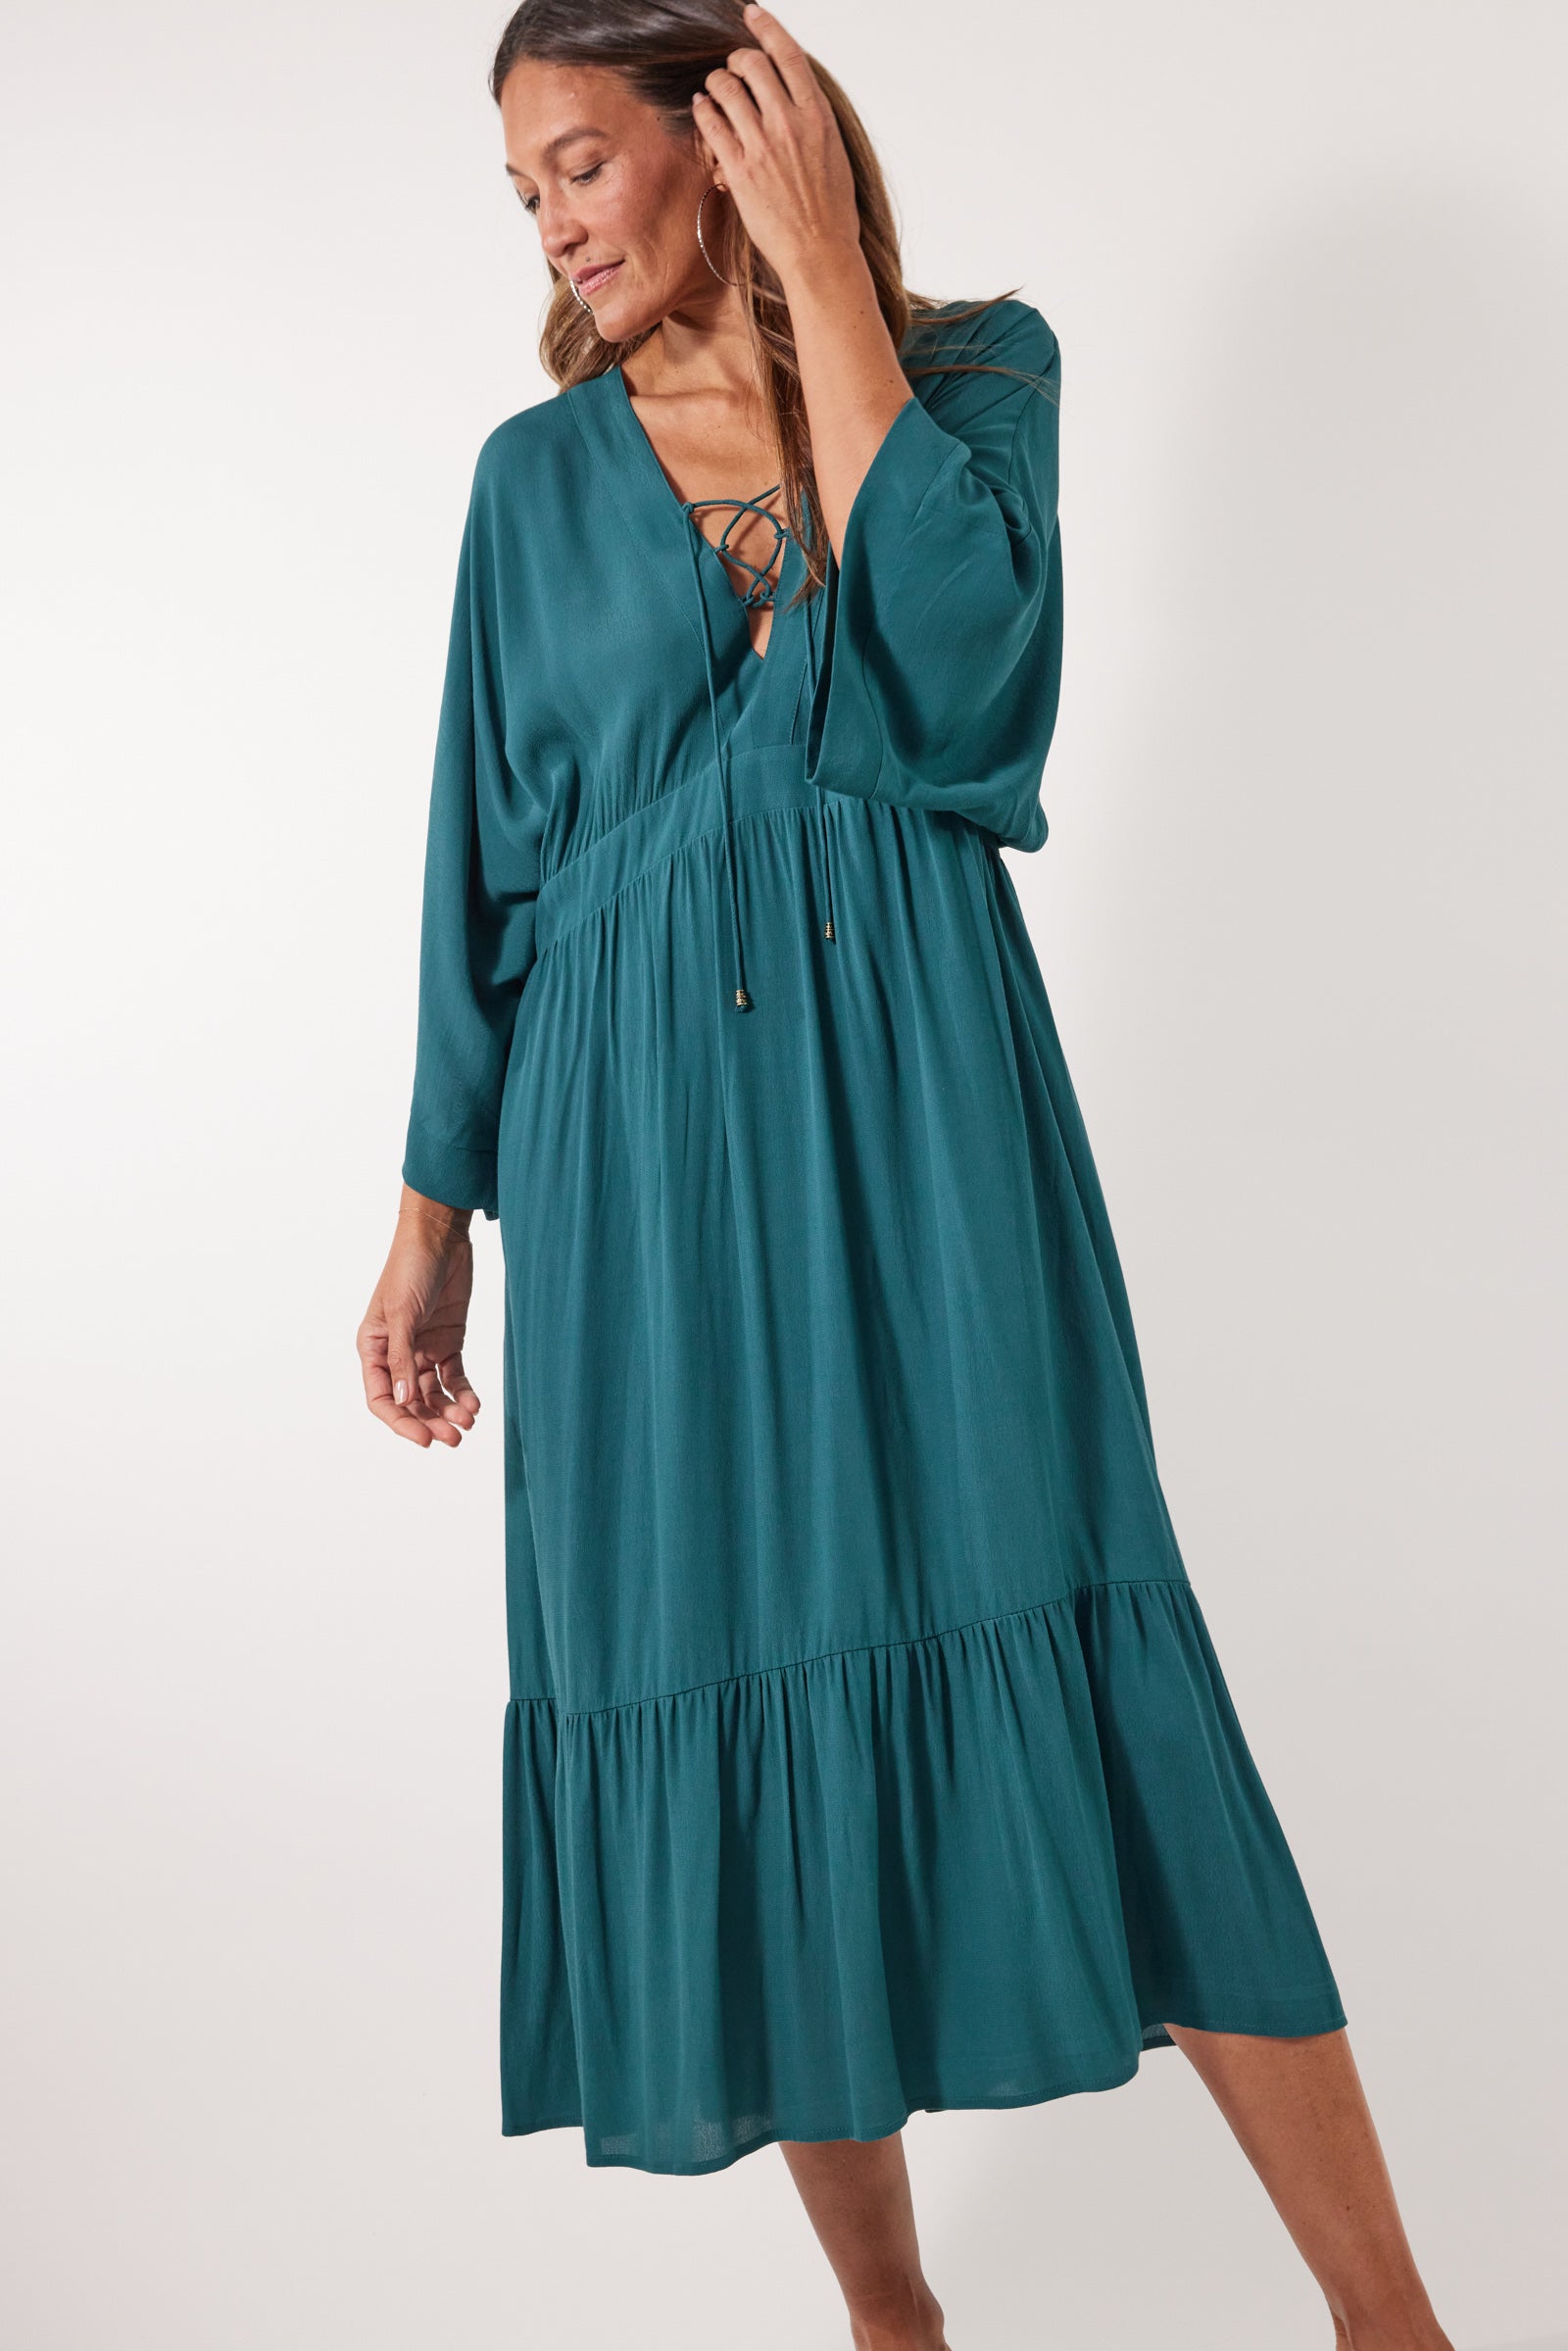 Botanical Relax Dress - Teal - Isle of Mine Clothing - Dress Maxi One Size